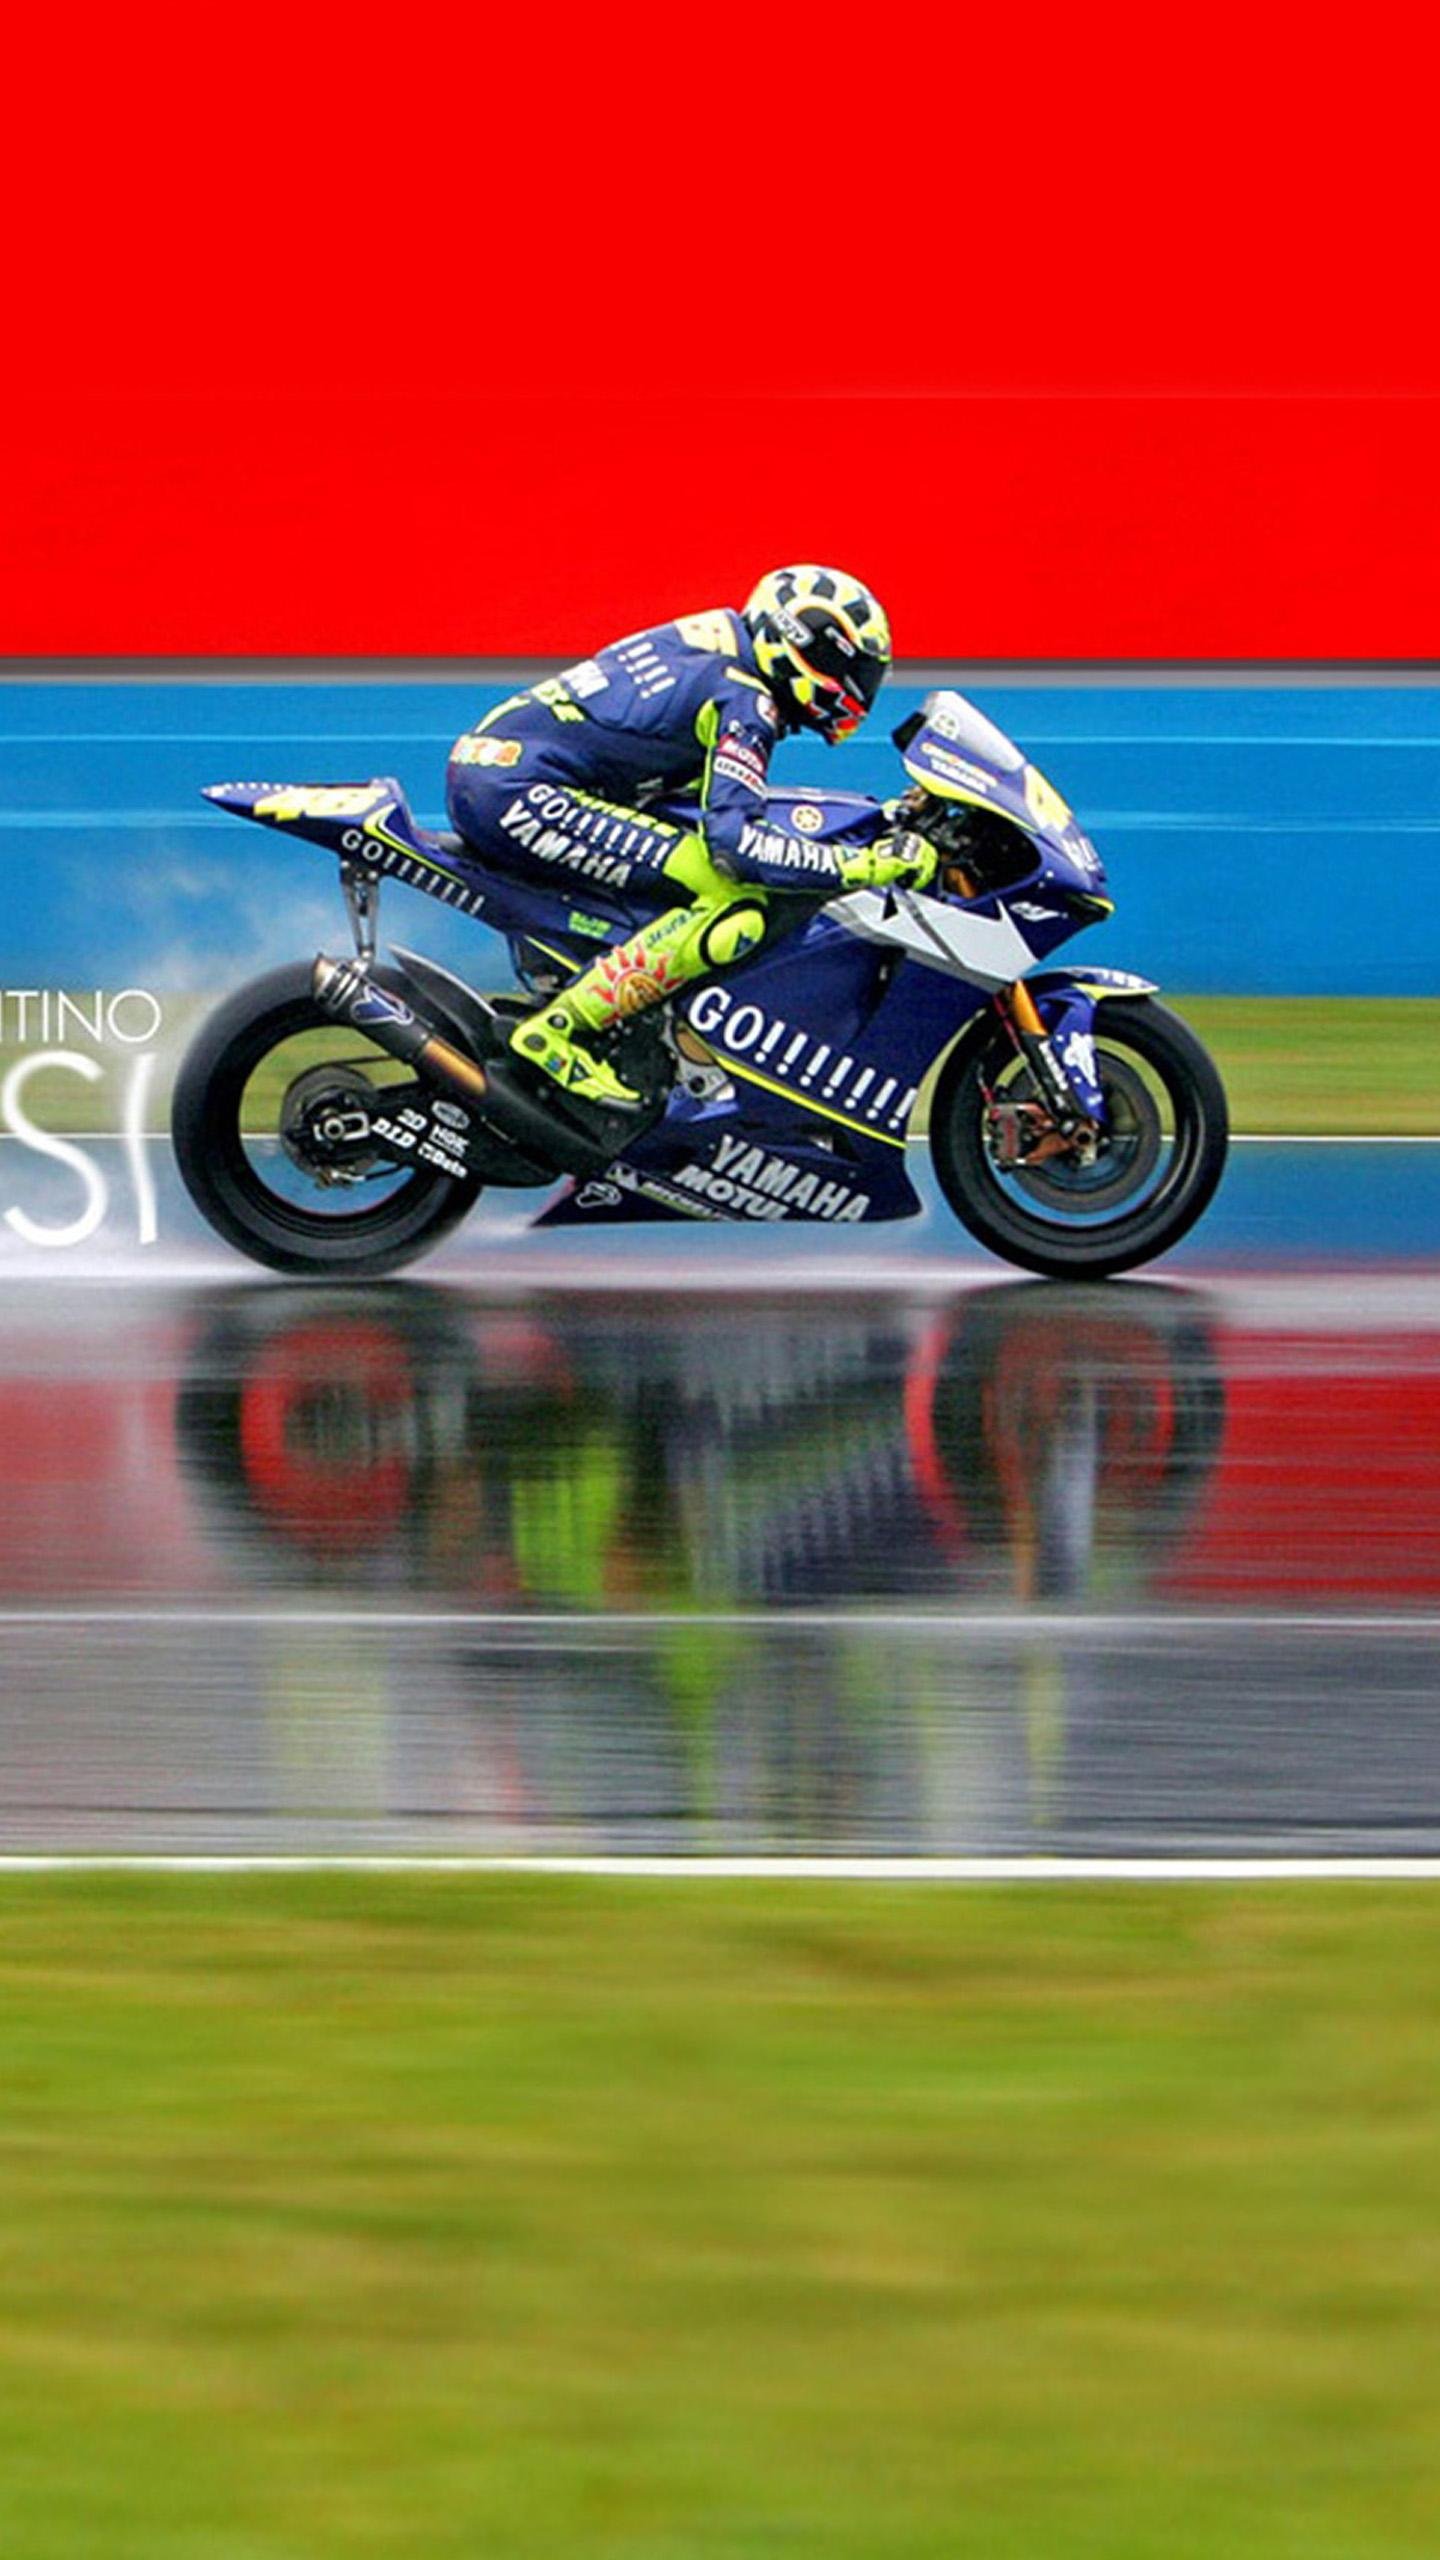 Valentino Rossi Wheelie Wallpaper Download | MobCup